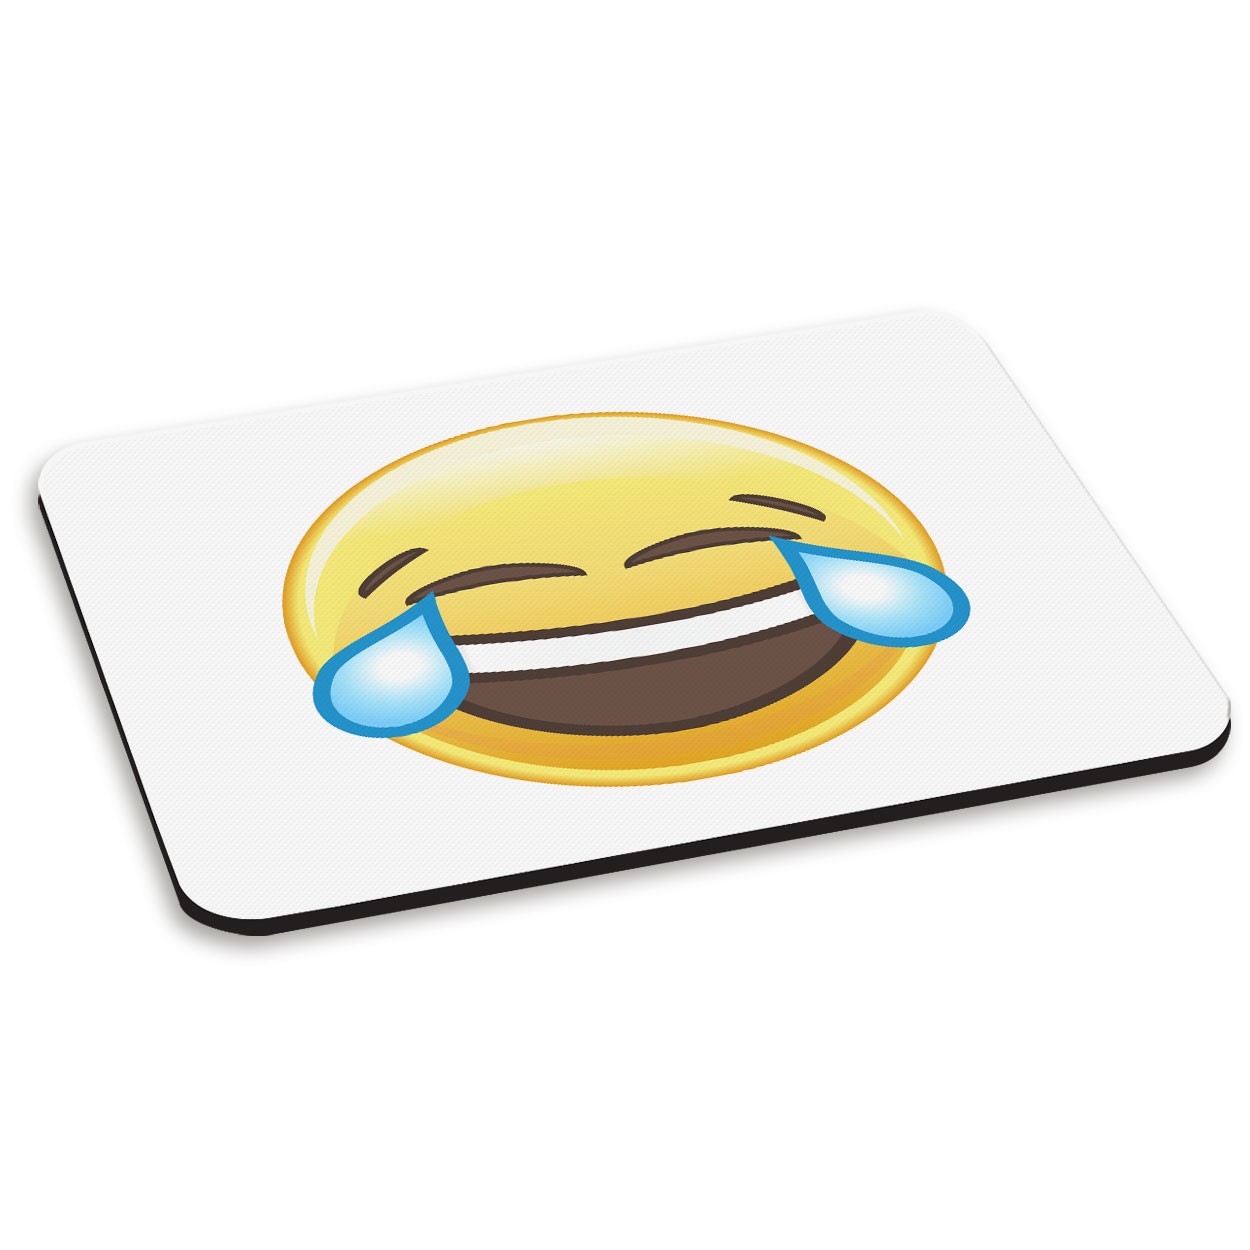 Laughing Crying Emoji PC Computer Mouse Mat Pad